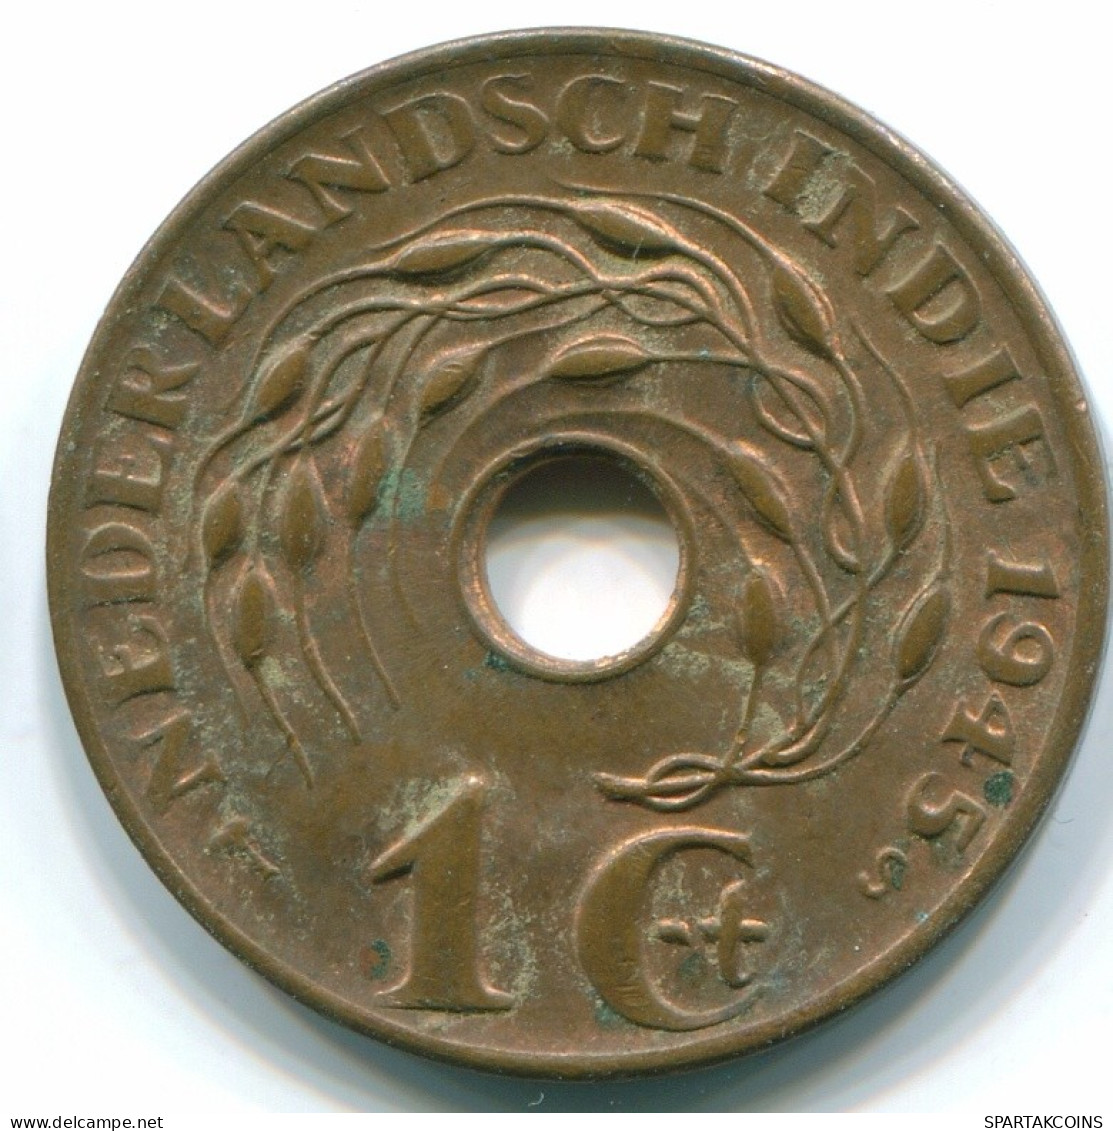 1 CENT 1945 S NIEDERLANDE OSTINDIEN INDONESISCH Koloniale Münze #S10373.D.A - Dutch East Indies